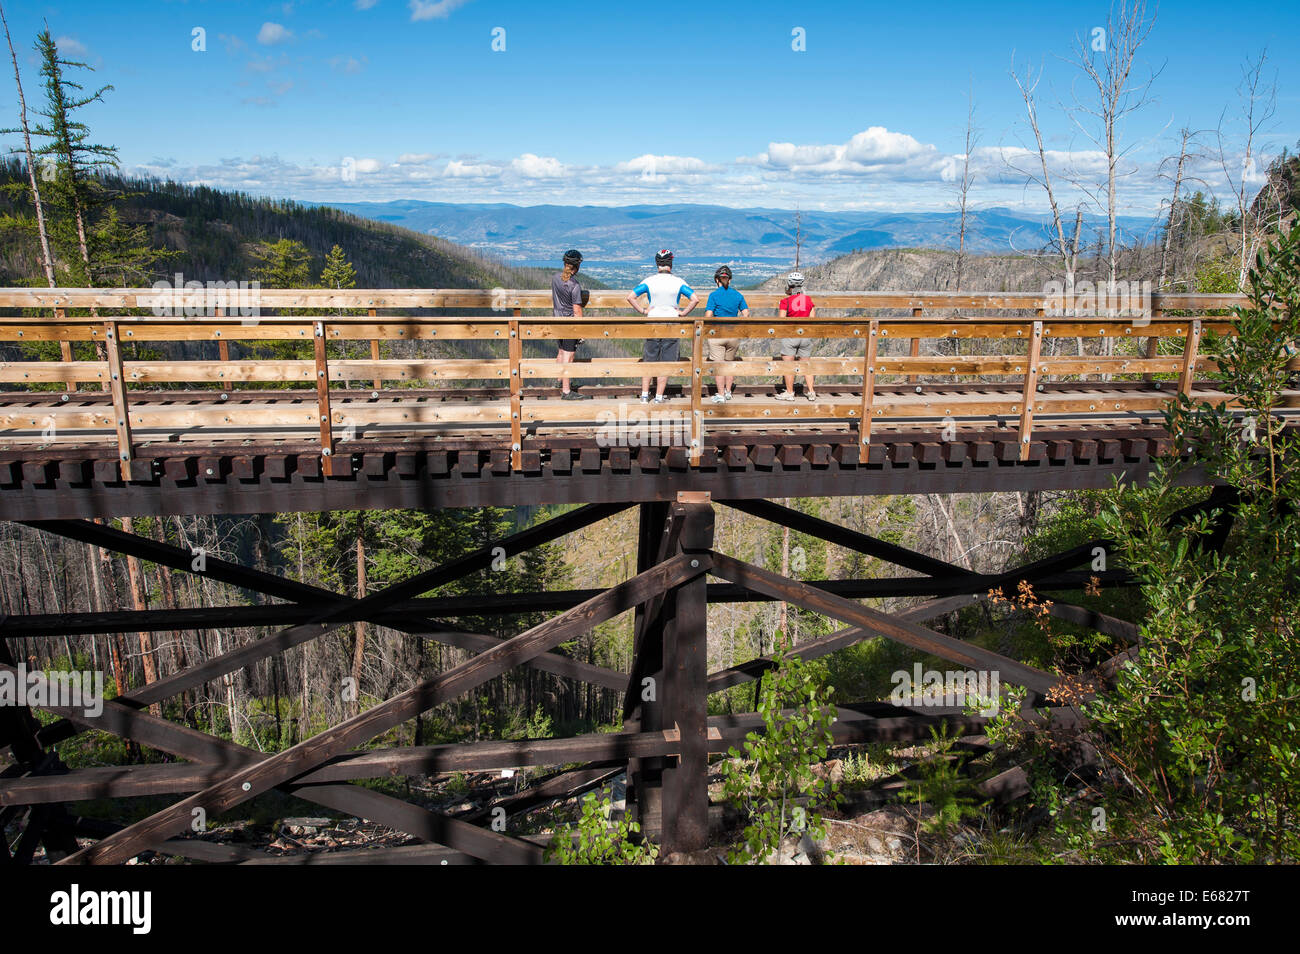 Mountain biking cycling riding the old wooden railway trestles trail in the Myra Canyon, Kelowna, British Columbia, Canada. Stock Photo